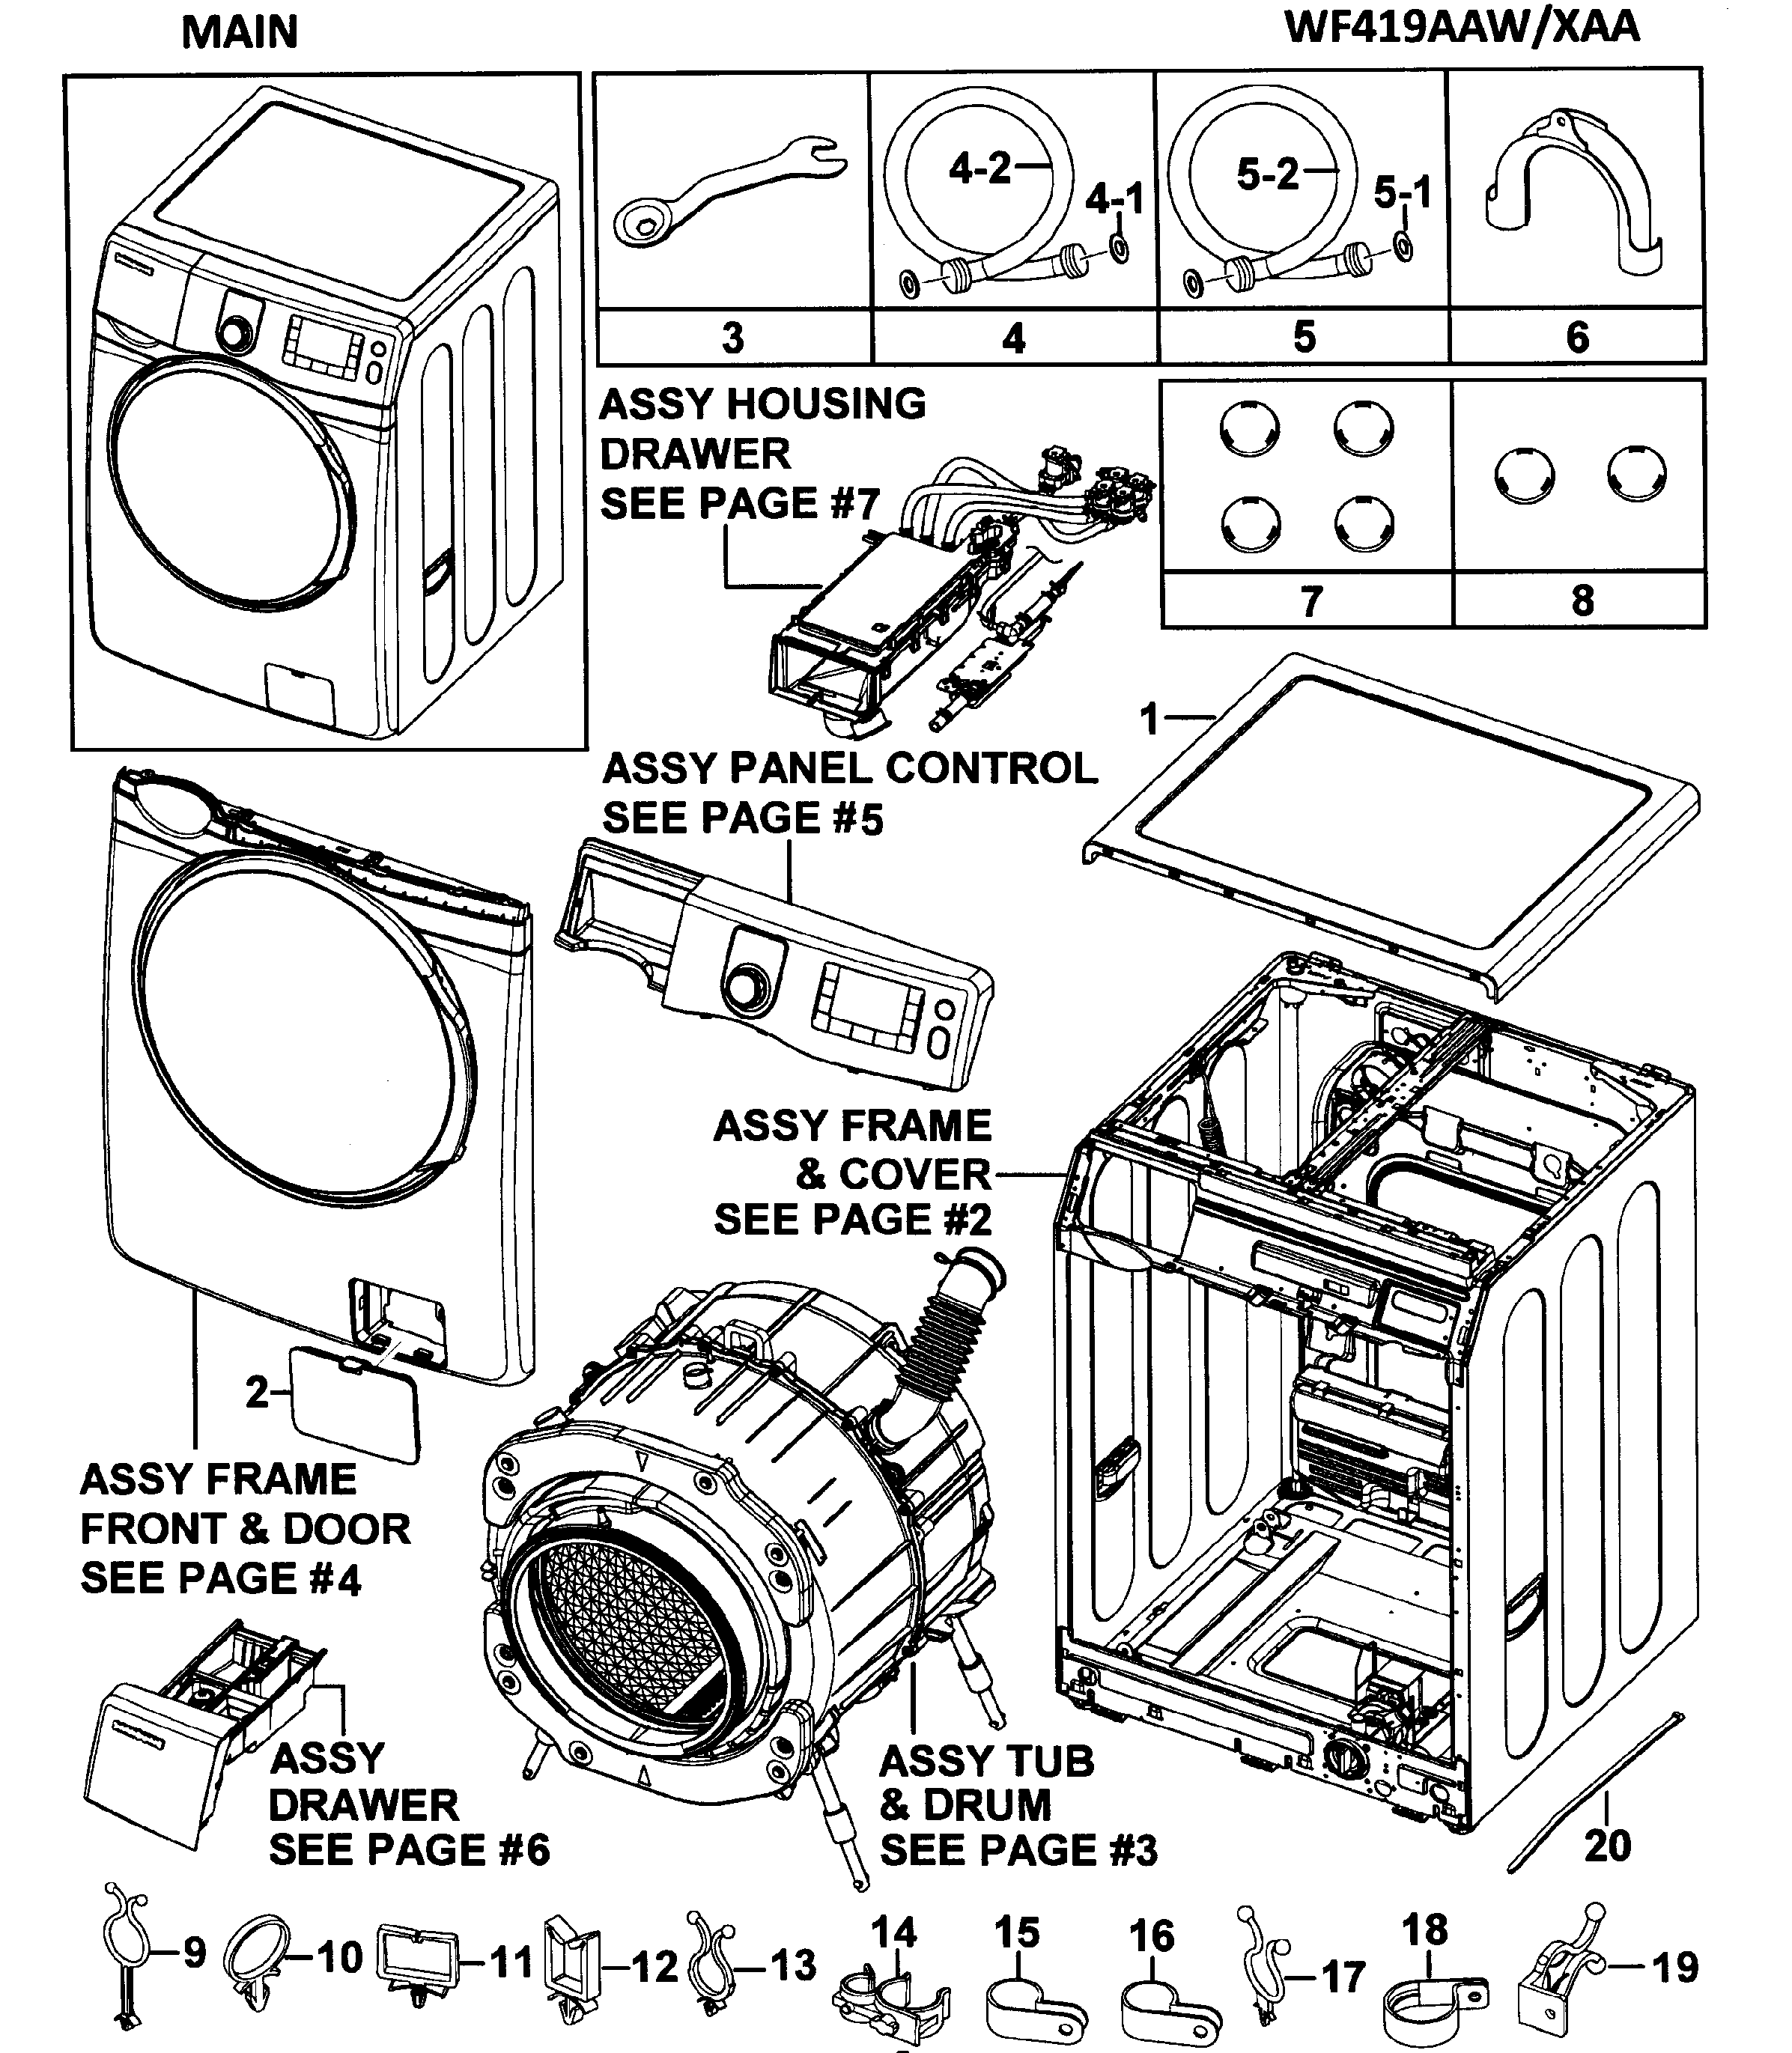 Front Loading Washing Machine Wiring Diagram 1999 Isuzu Npr Fuse Diagram Keys Can Acces Lalu Decorresine It